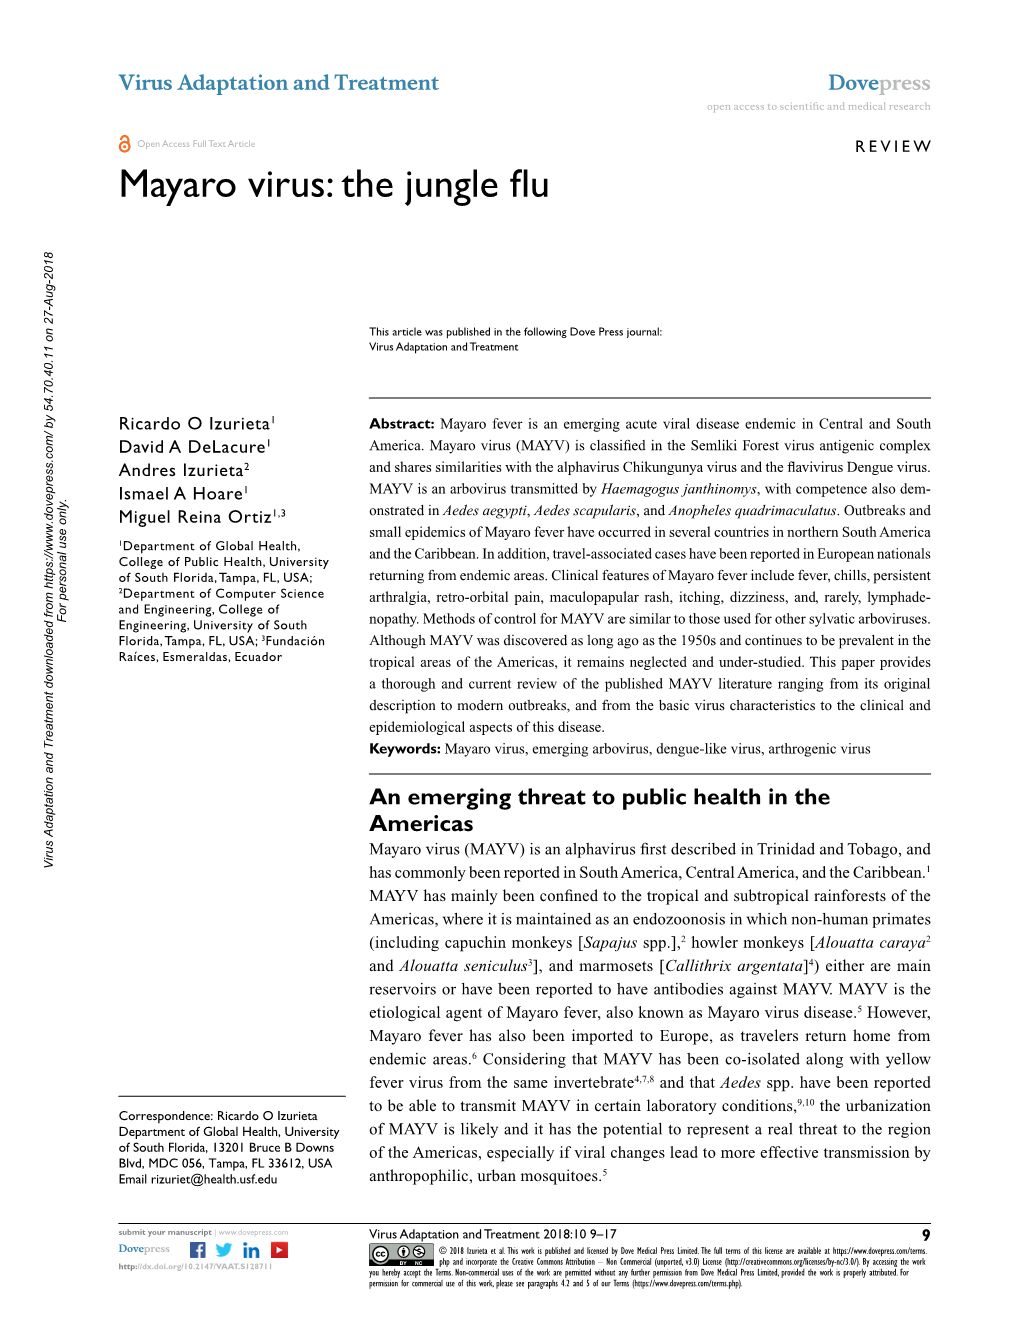 Mayaro Virus: the Jungle Flu Open Access to Scientific and Medical Research DOI